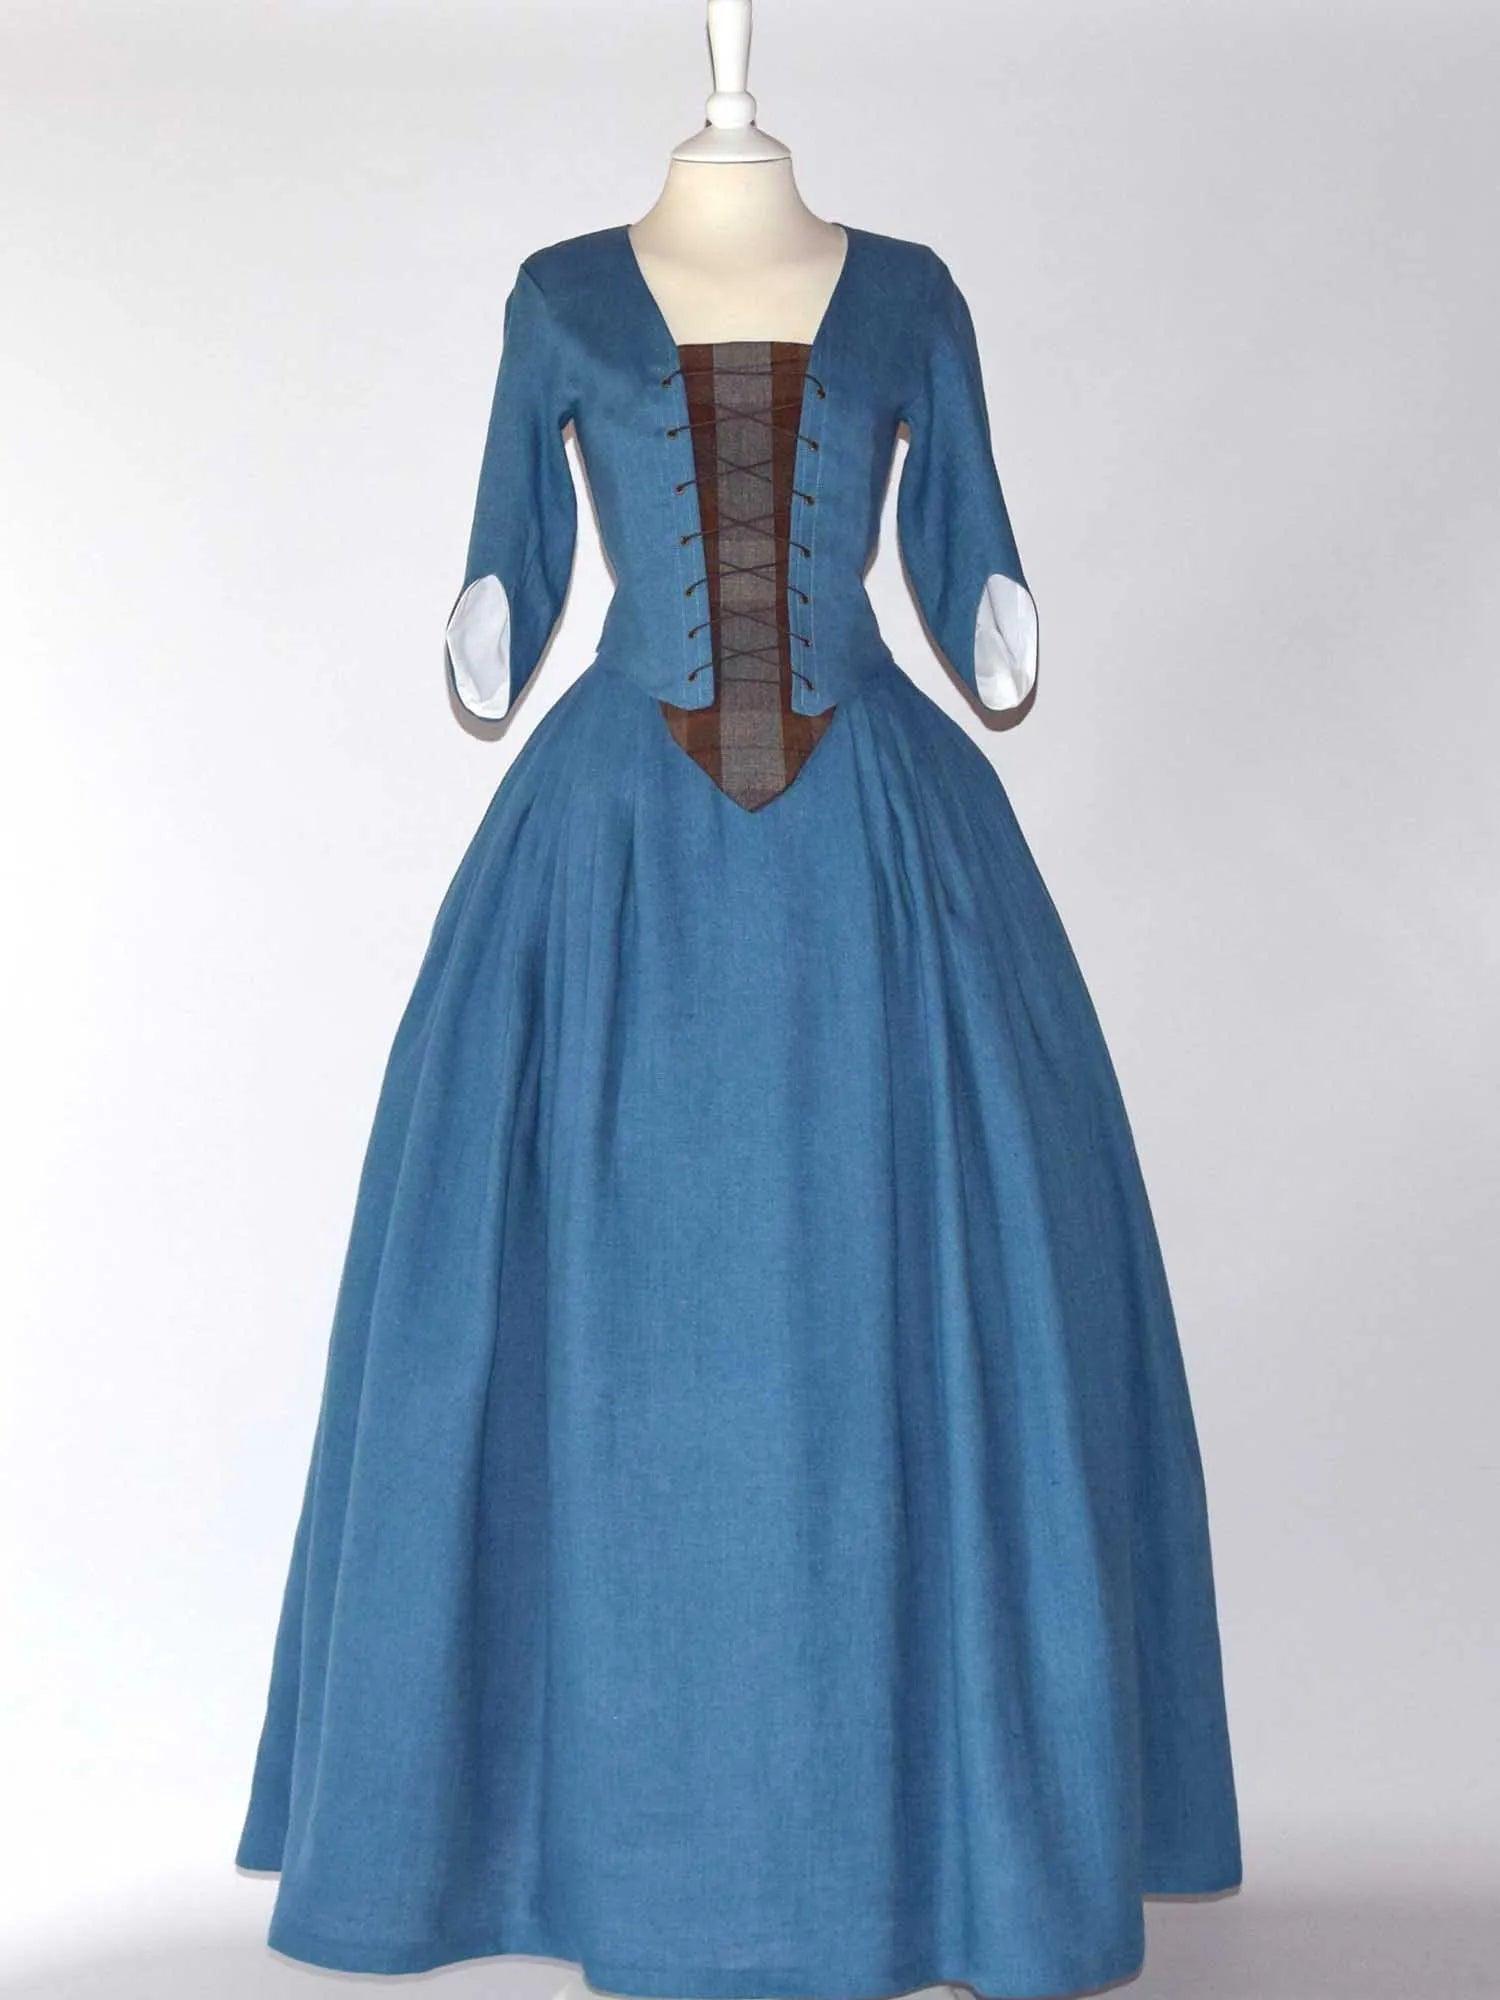 Historical Costume in Steel Blue Linen & Outlander Tartan Shawl - Atelier Serraspina